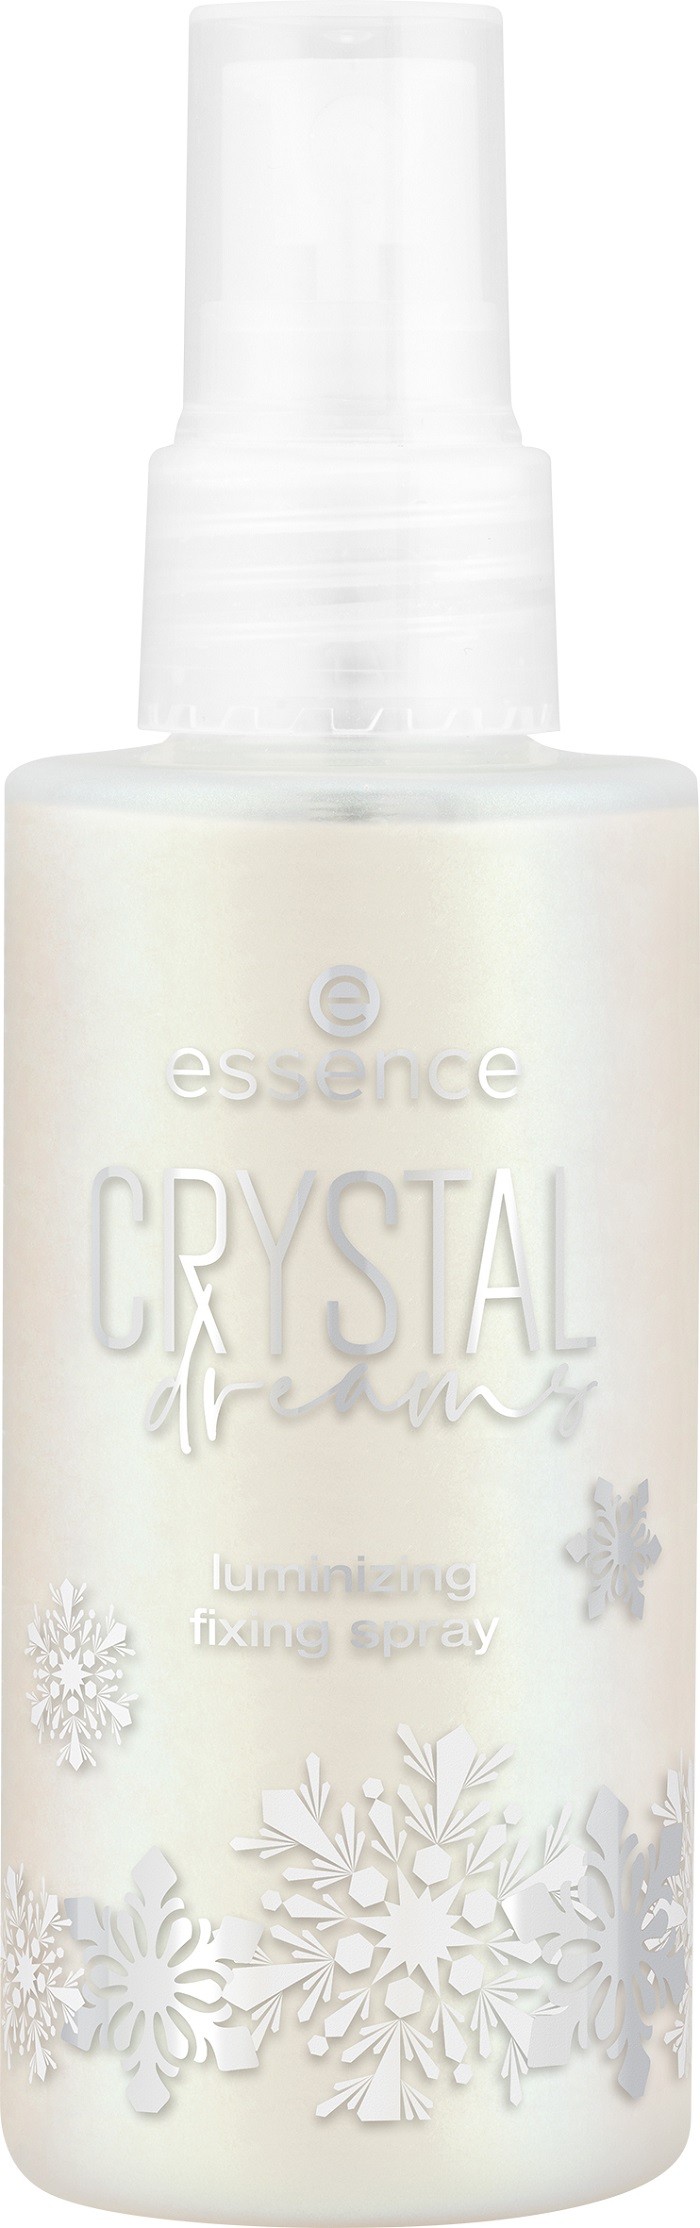 Кристалл эссенс. Essence фиксатор макияжа. Crystal Essence. Спрей-иллюминайзер для лица. Crystal Essence косметика.